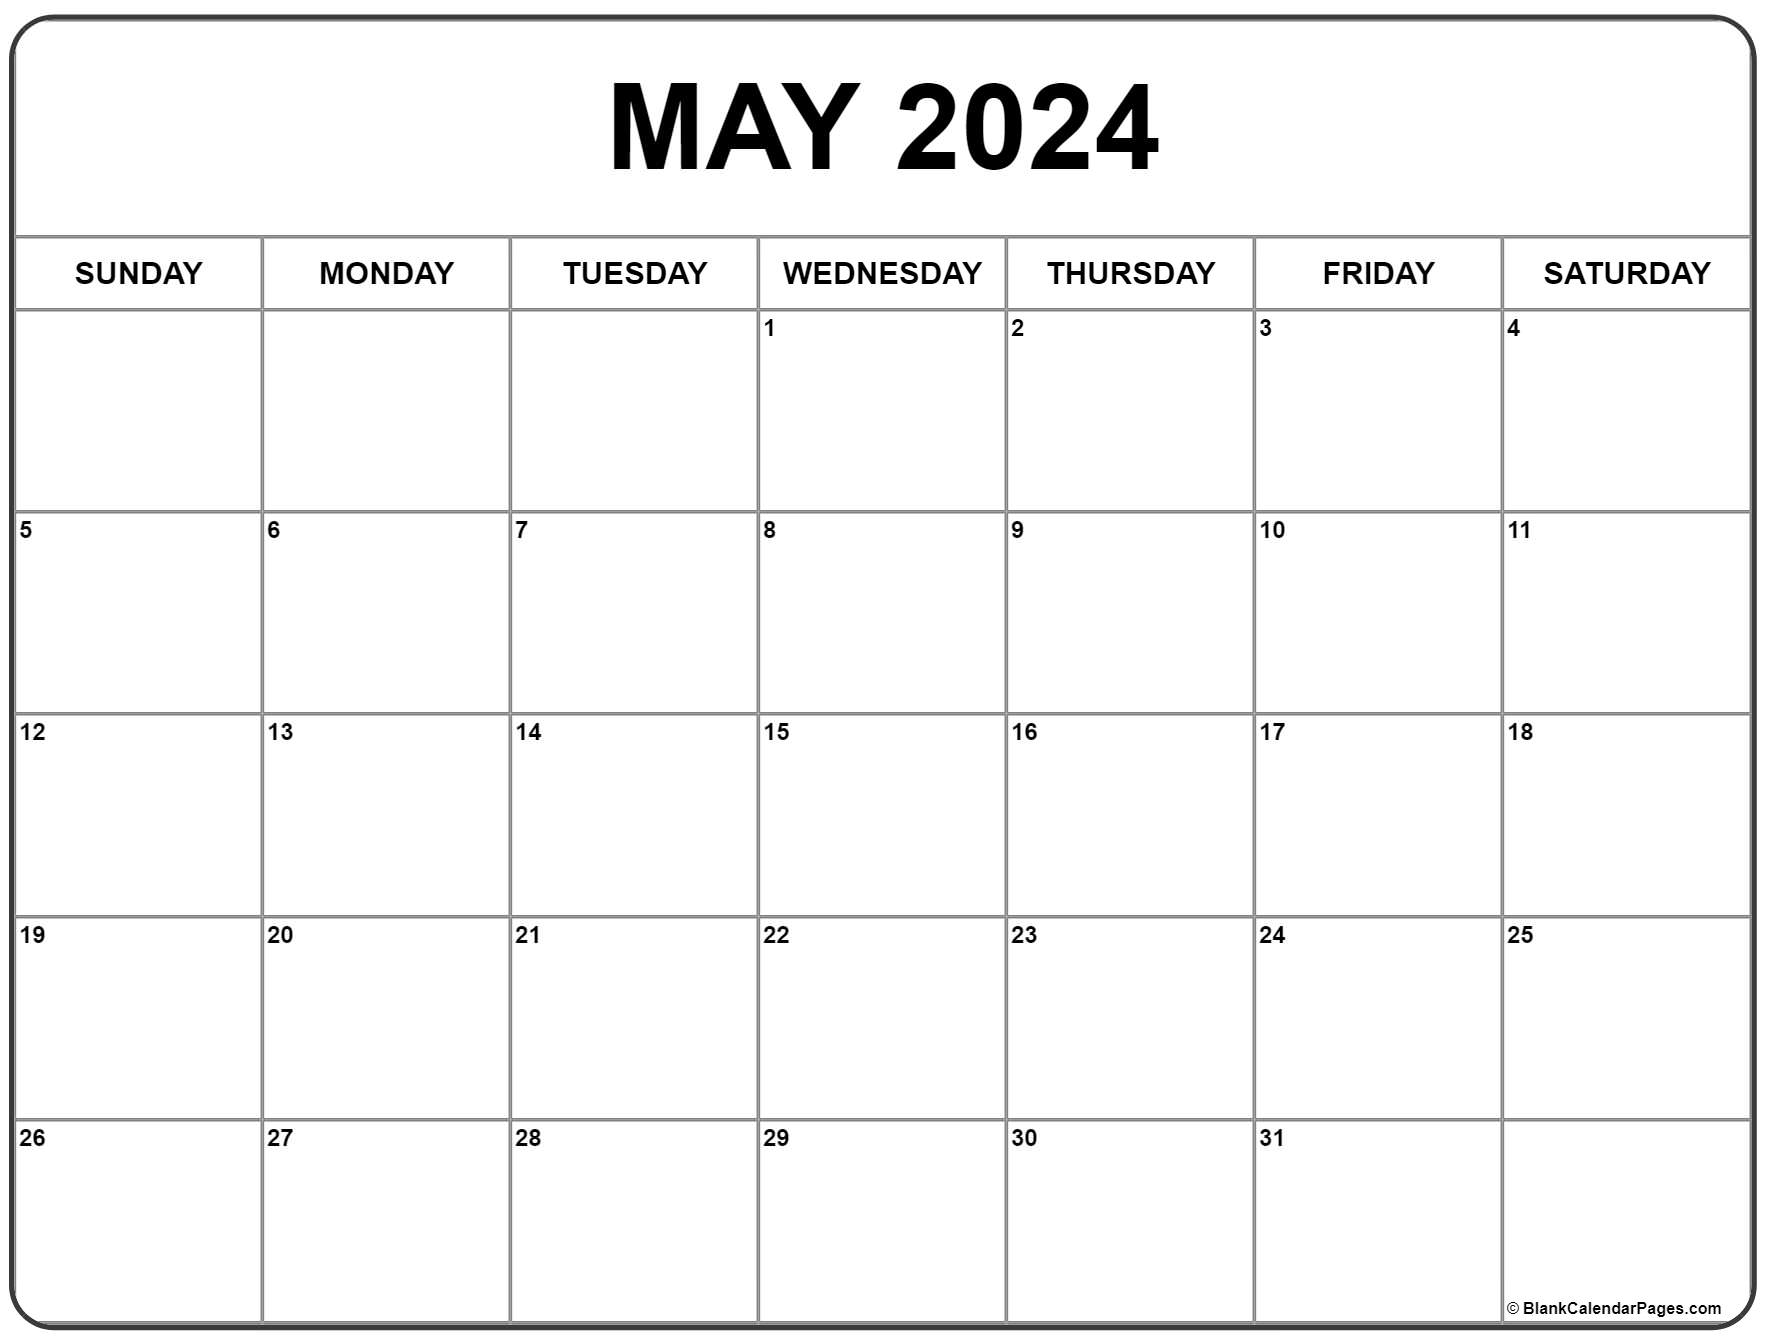 May 2024 Calendar | Free Printable Calendar for Printable Calendar Month May 2024